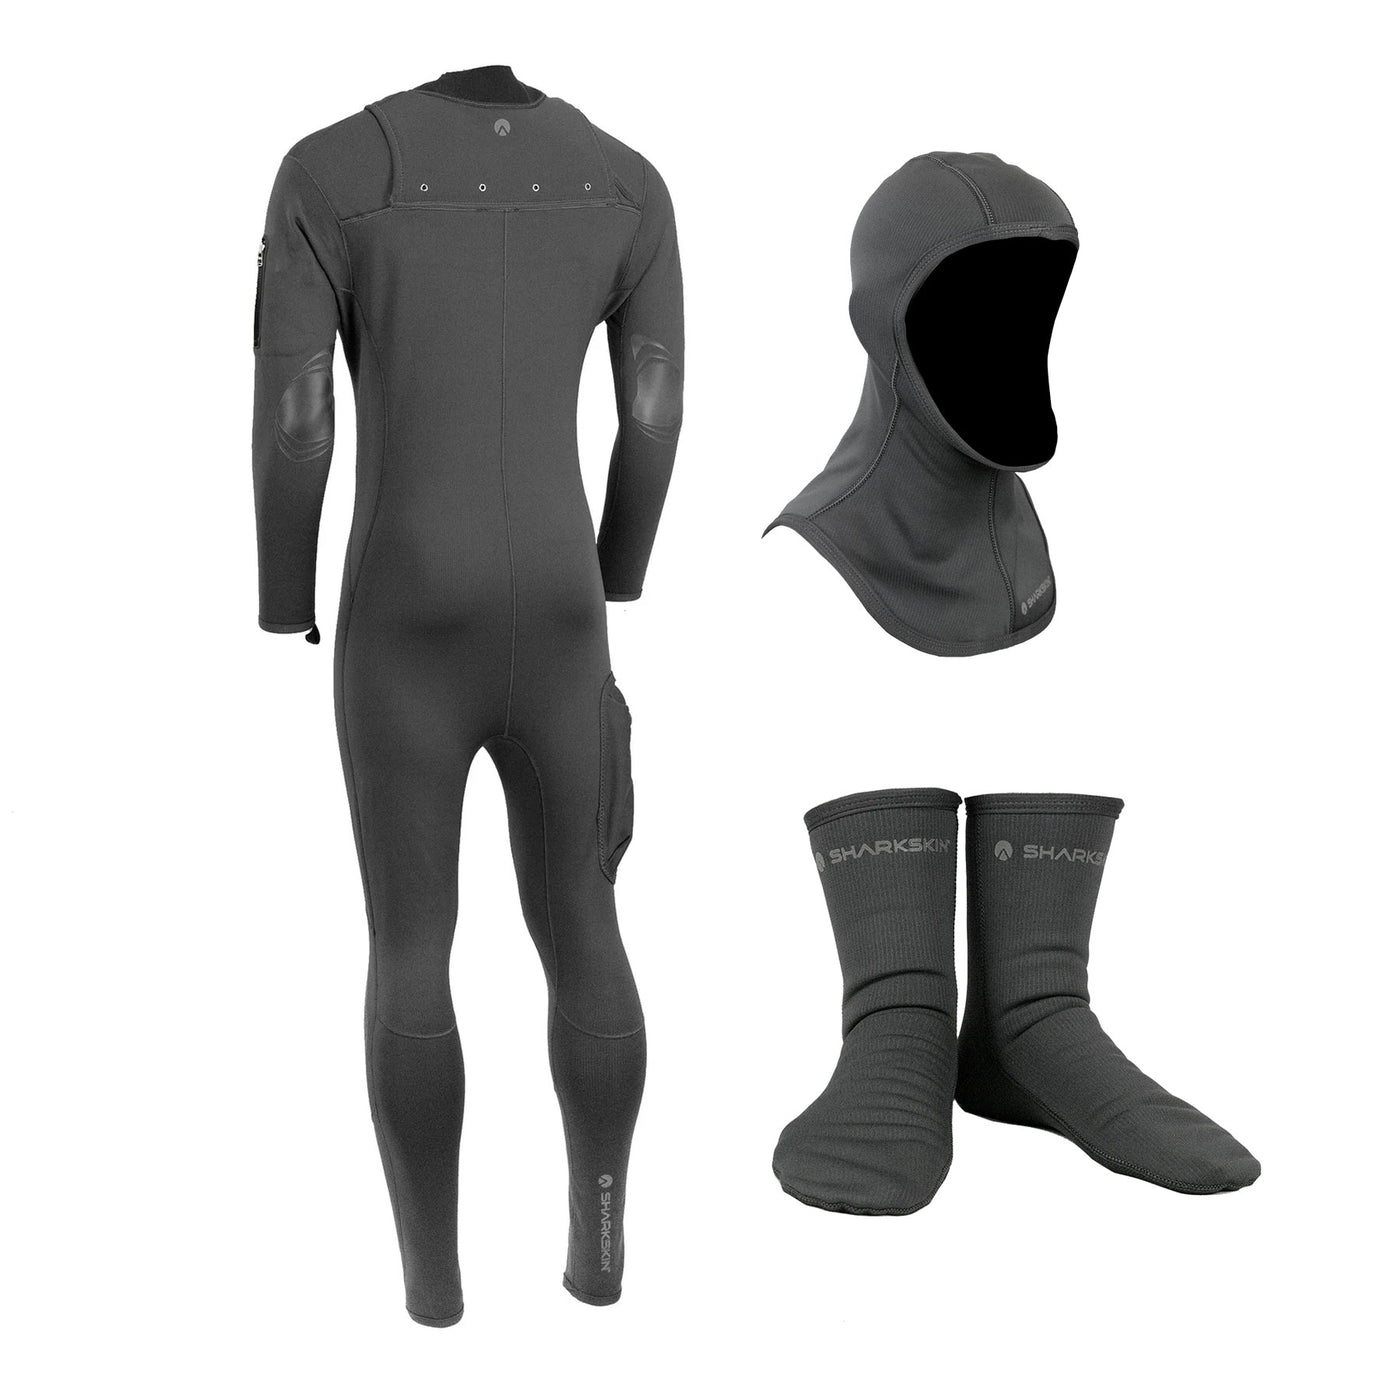 Titanium 2 Front Multi-Sport Suit with Hood & Socks Package - Female